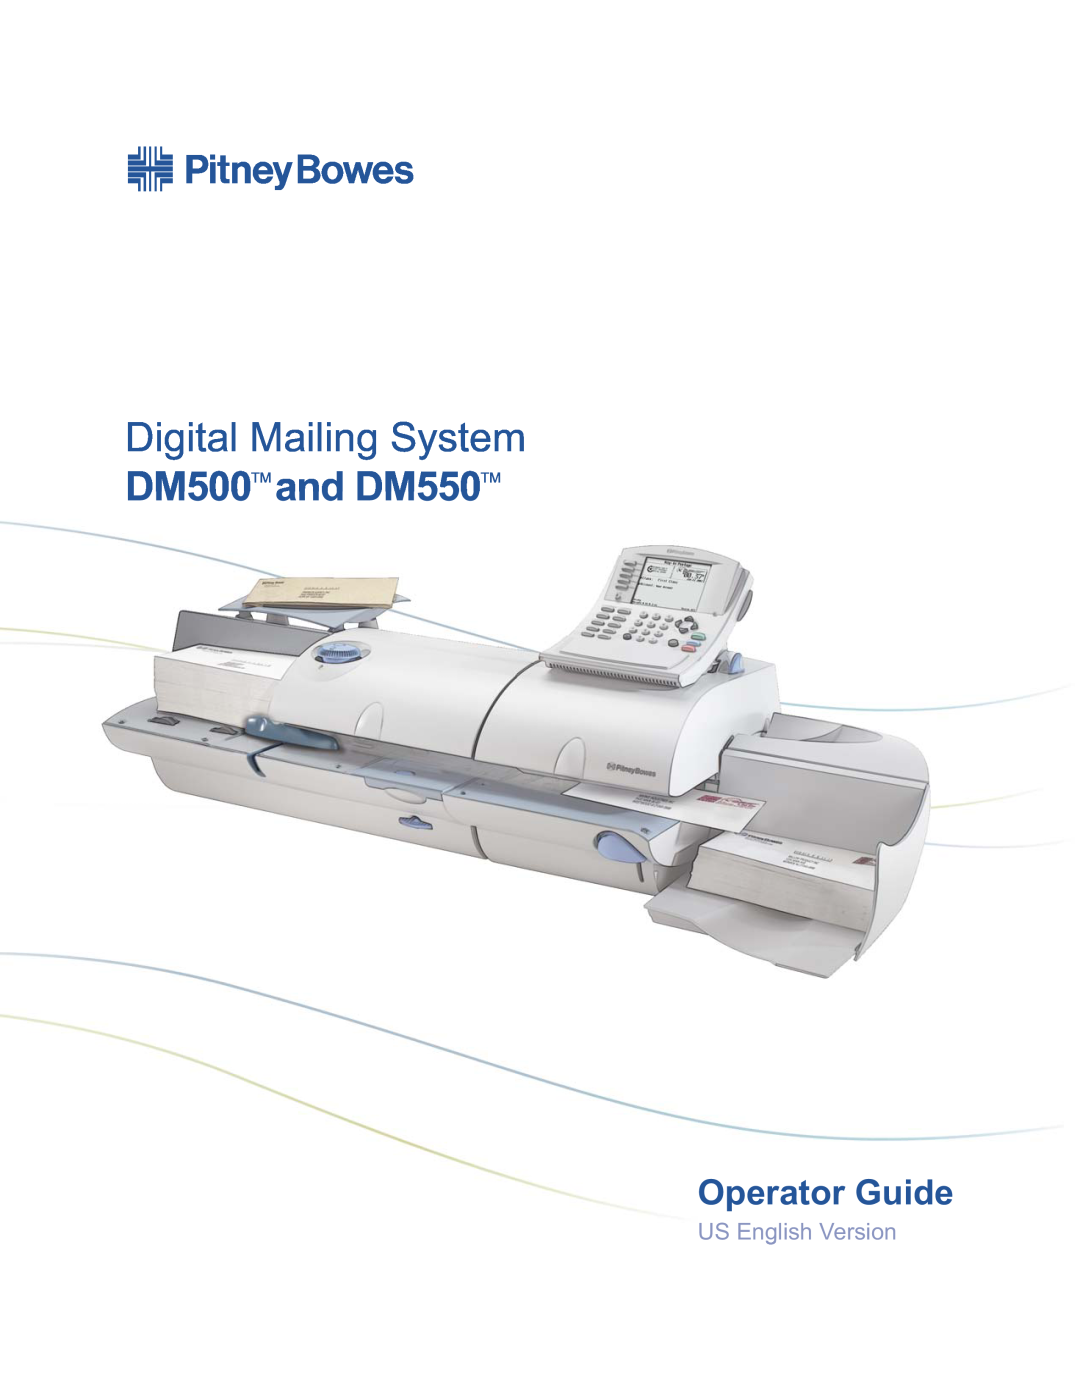 Pitney Bowes manual Digital Mailing System, DM500TMand DM550TM, Operator Guide, US English Version 